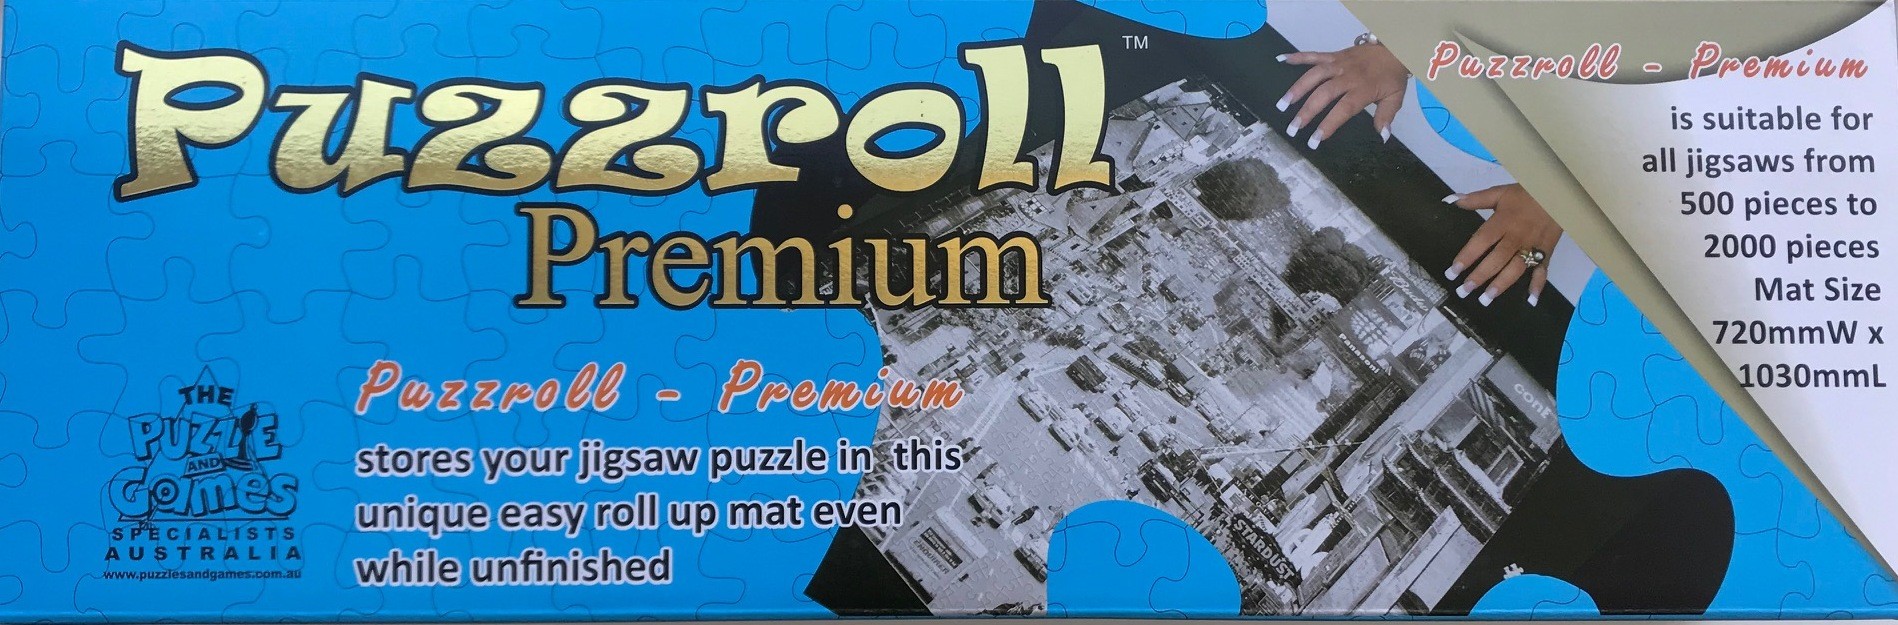 Jigsaw Puzzroll Premium - Jigsaw storage roll, Puzzroll Premium to suit 500-2000 piece